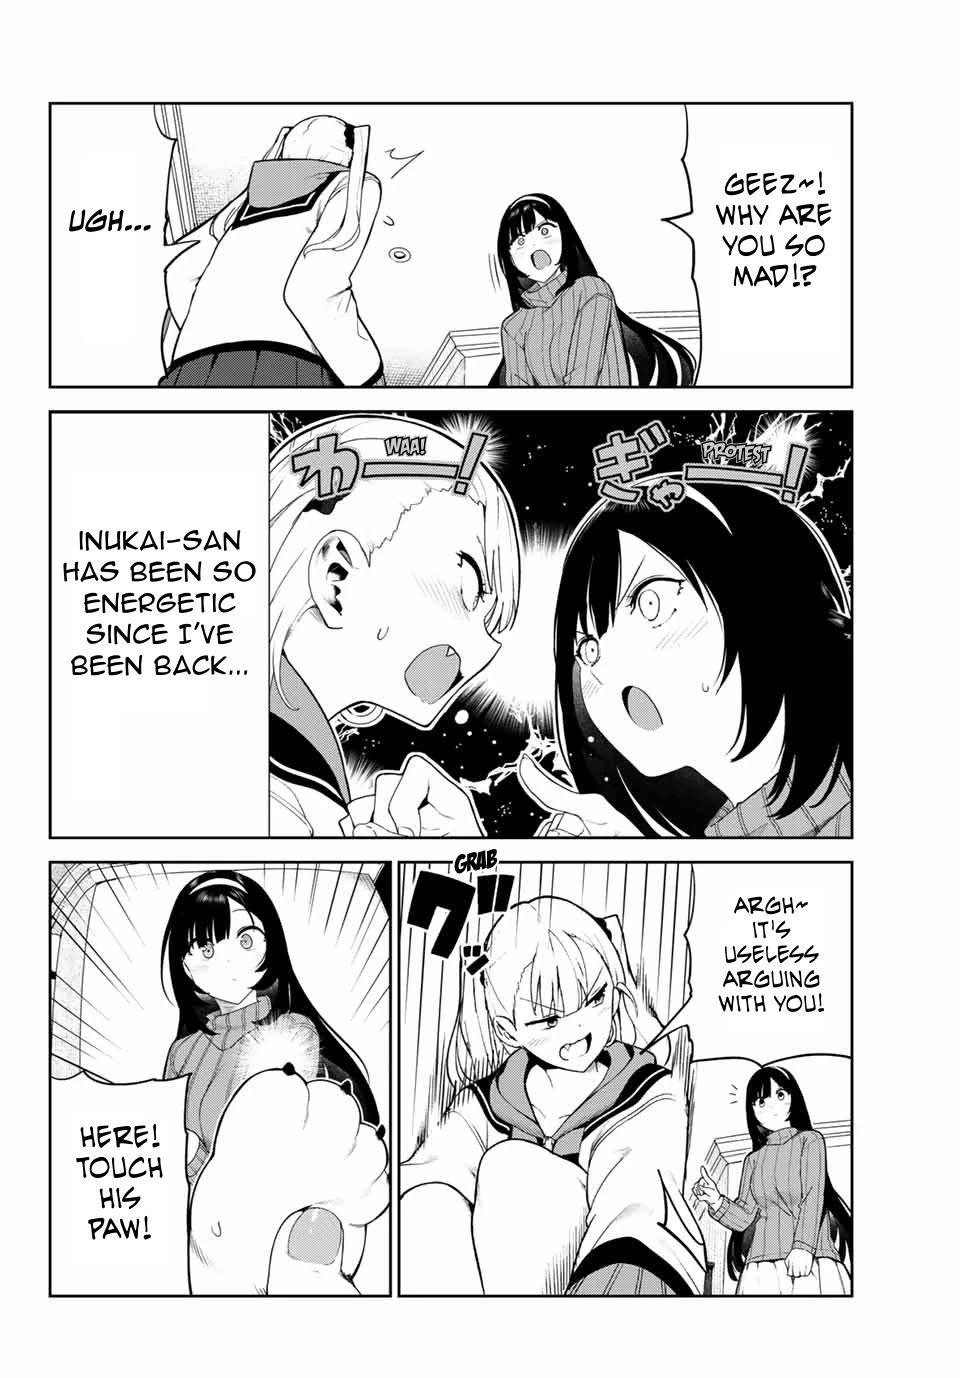 My Life as Inukai-san's Dog Ch.22 Page 8 - Mangago